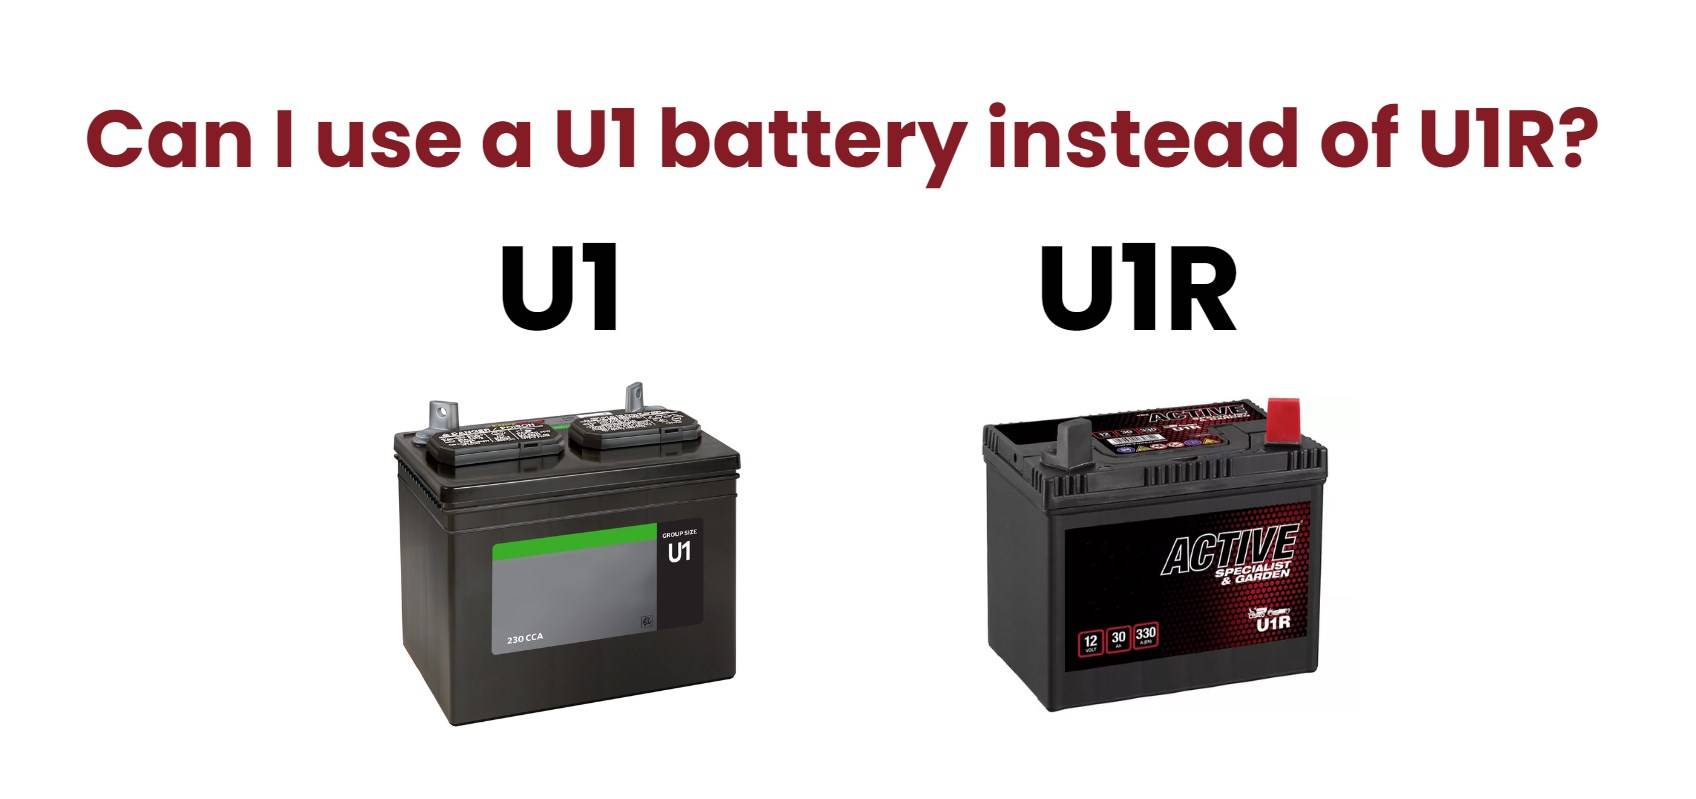 Can I use a U1 battery instead of U1R?